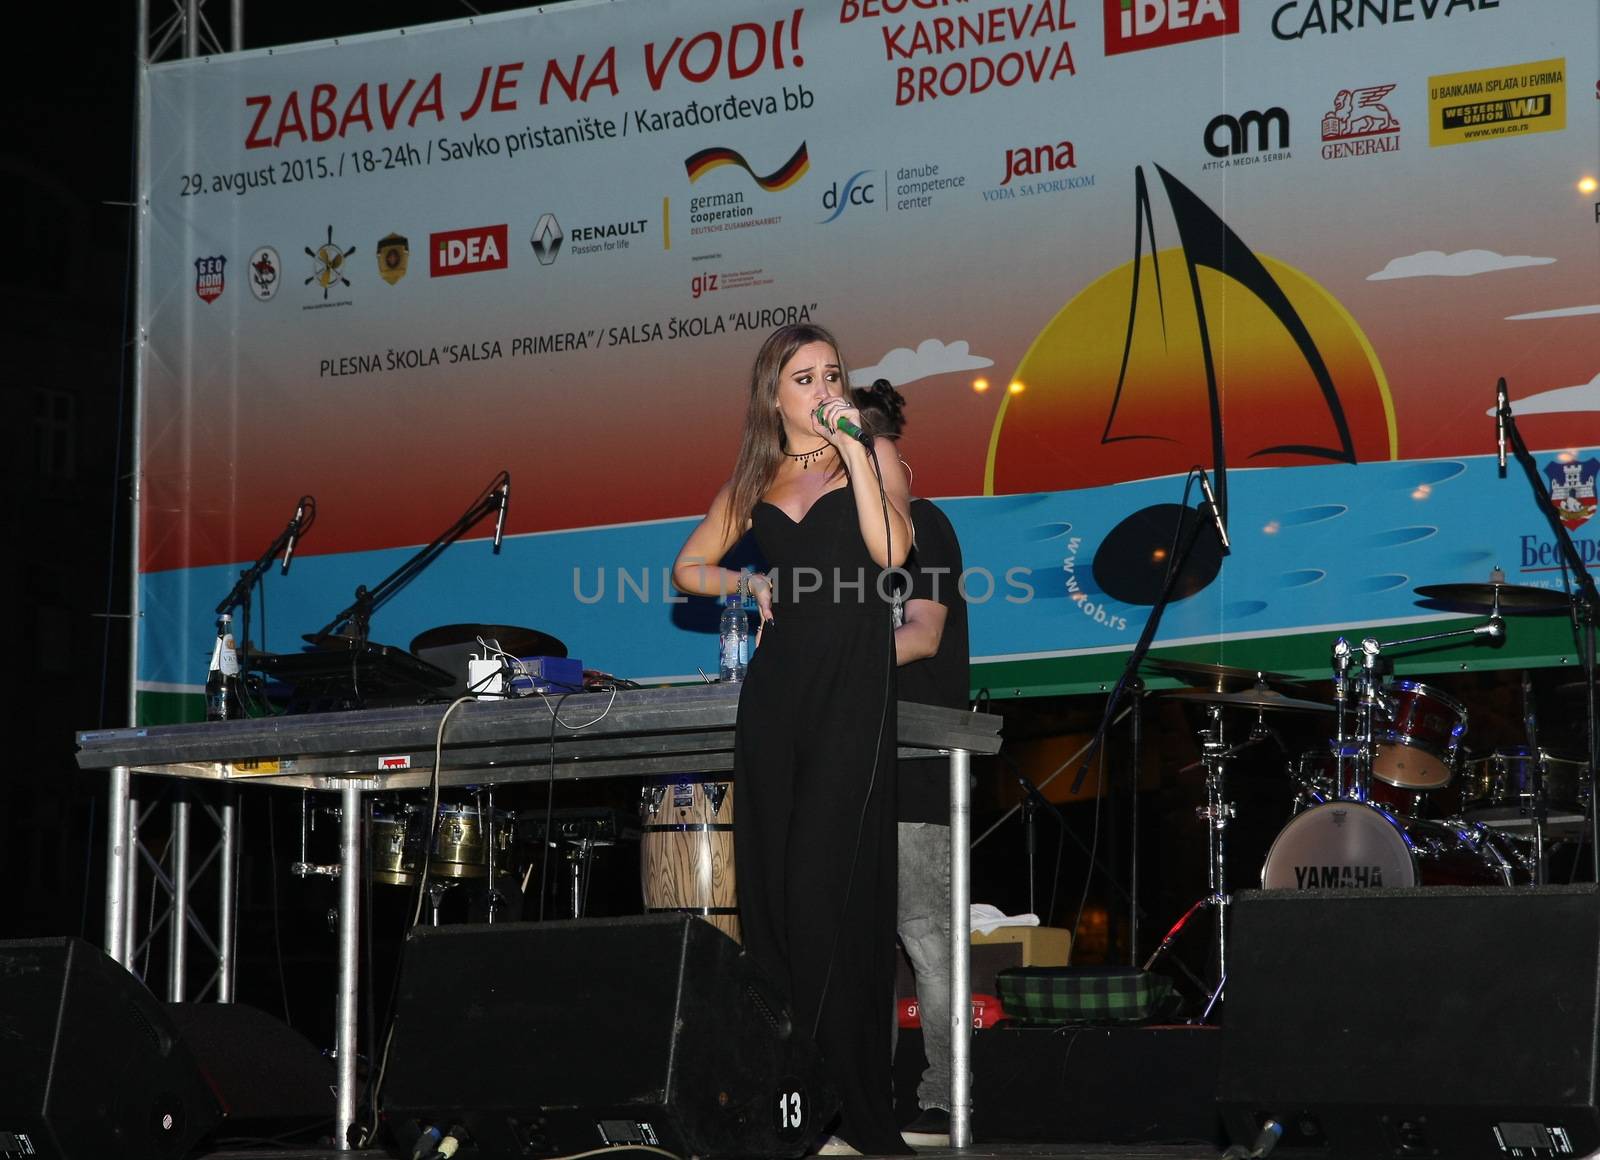 Sevdah Baby band  concert at Belgrade Boat Carnival held on Avgust 29 2015 at Belgrade,Serbia